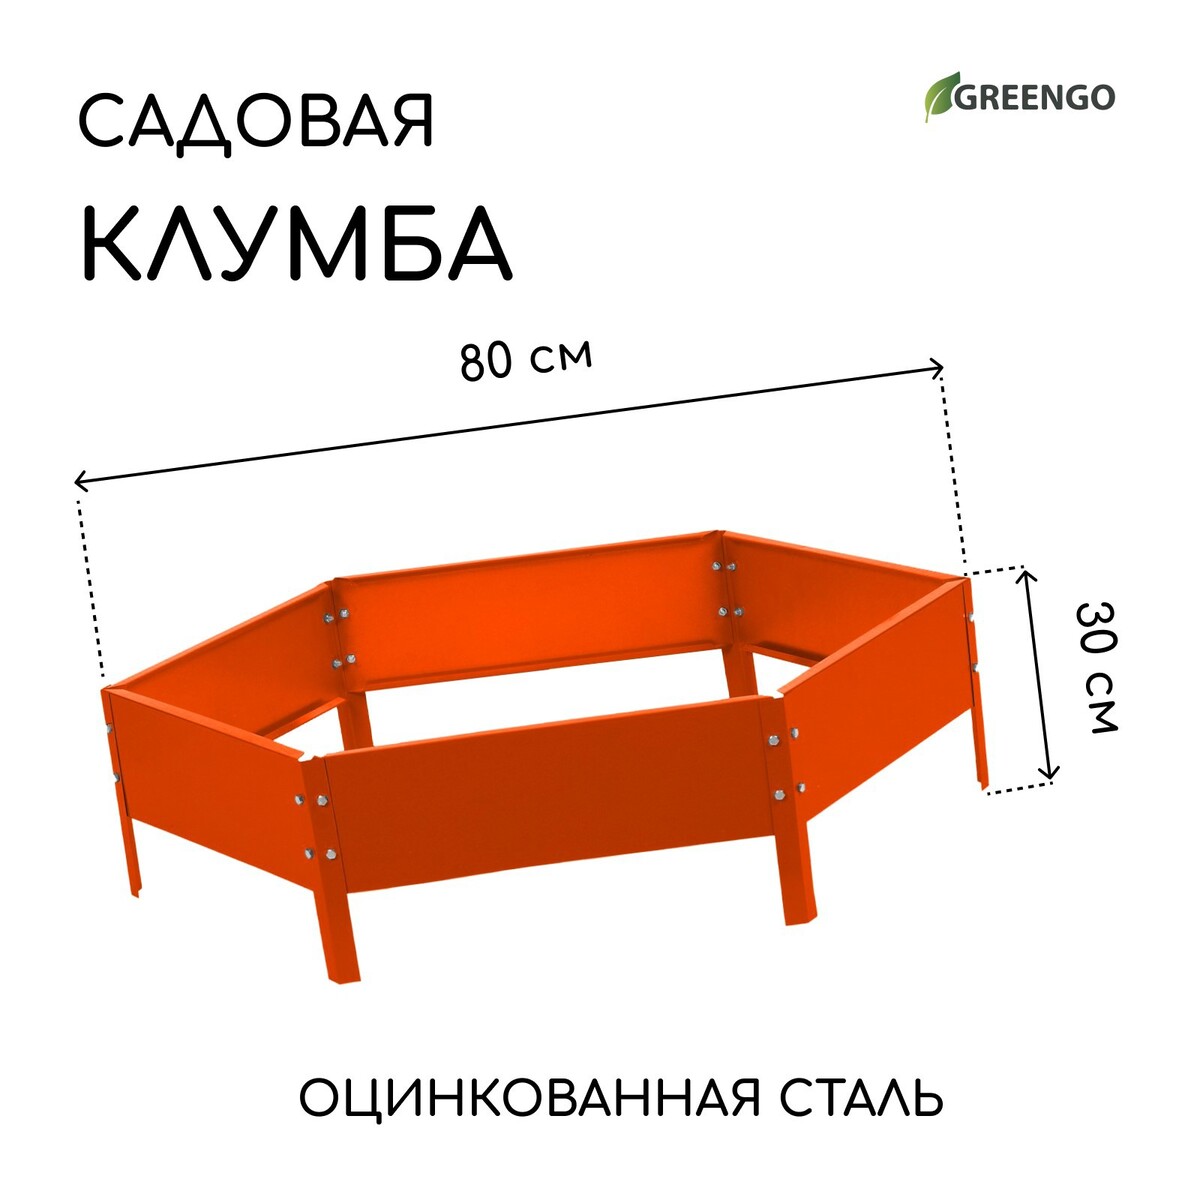 Клумба оцинкованная, d = 80 см, h = 15 см, оранжевая, greengo клумба оцинкованная 50 × 50 × 15 см оранжевая